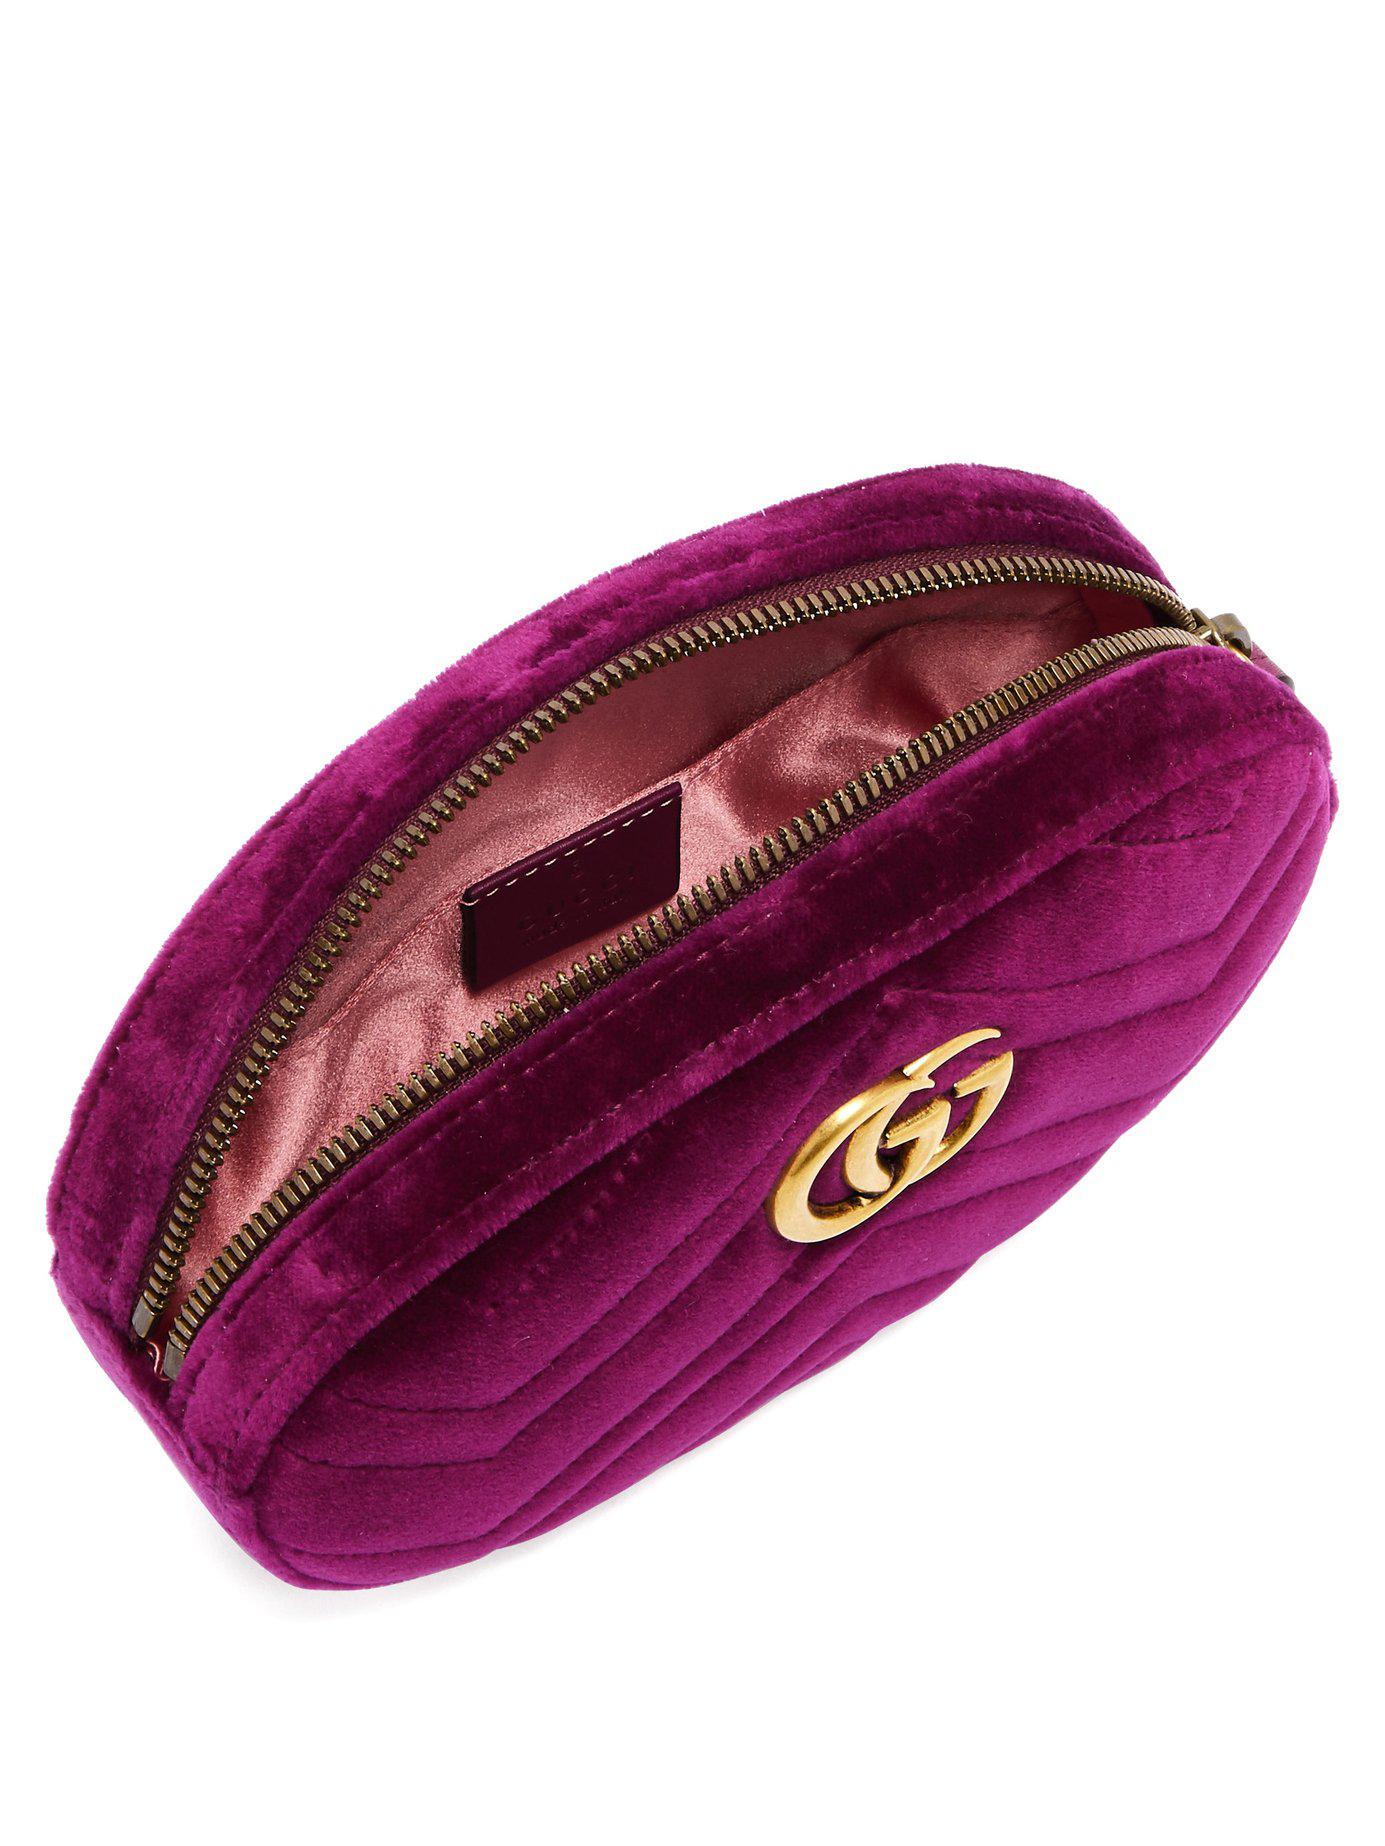 Gucci Gg Marmont Velvet Belt Bag in Purple - Lyst